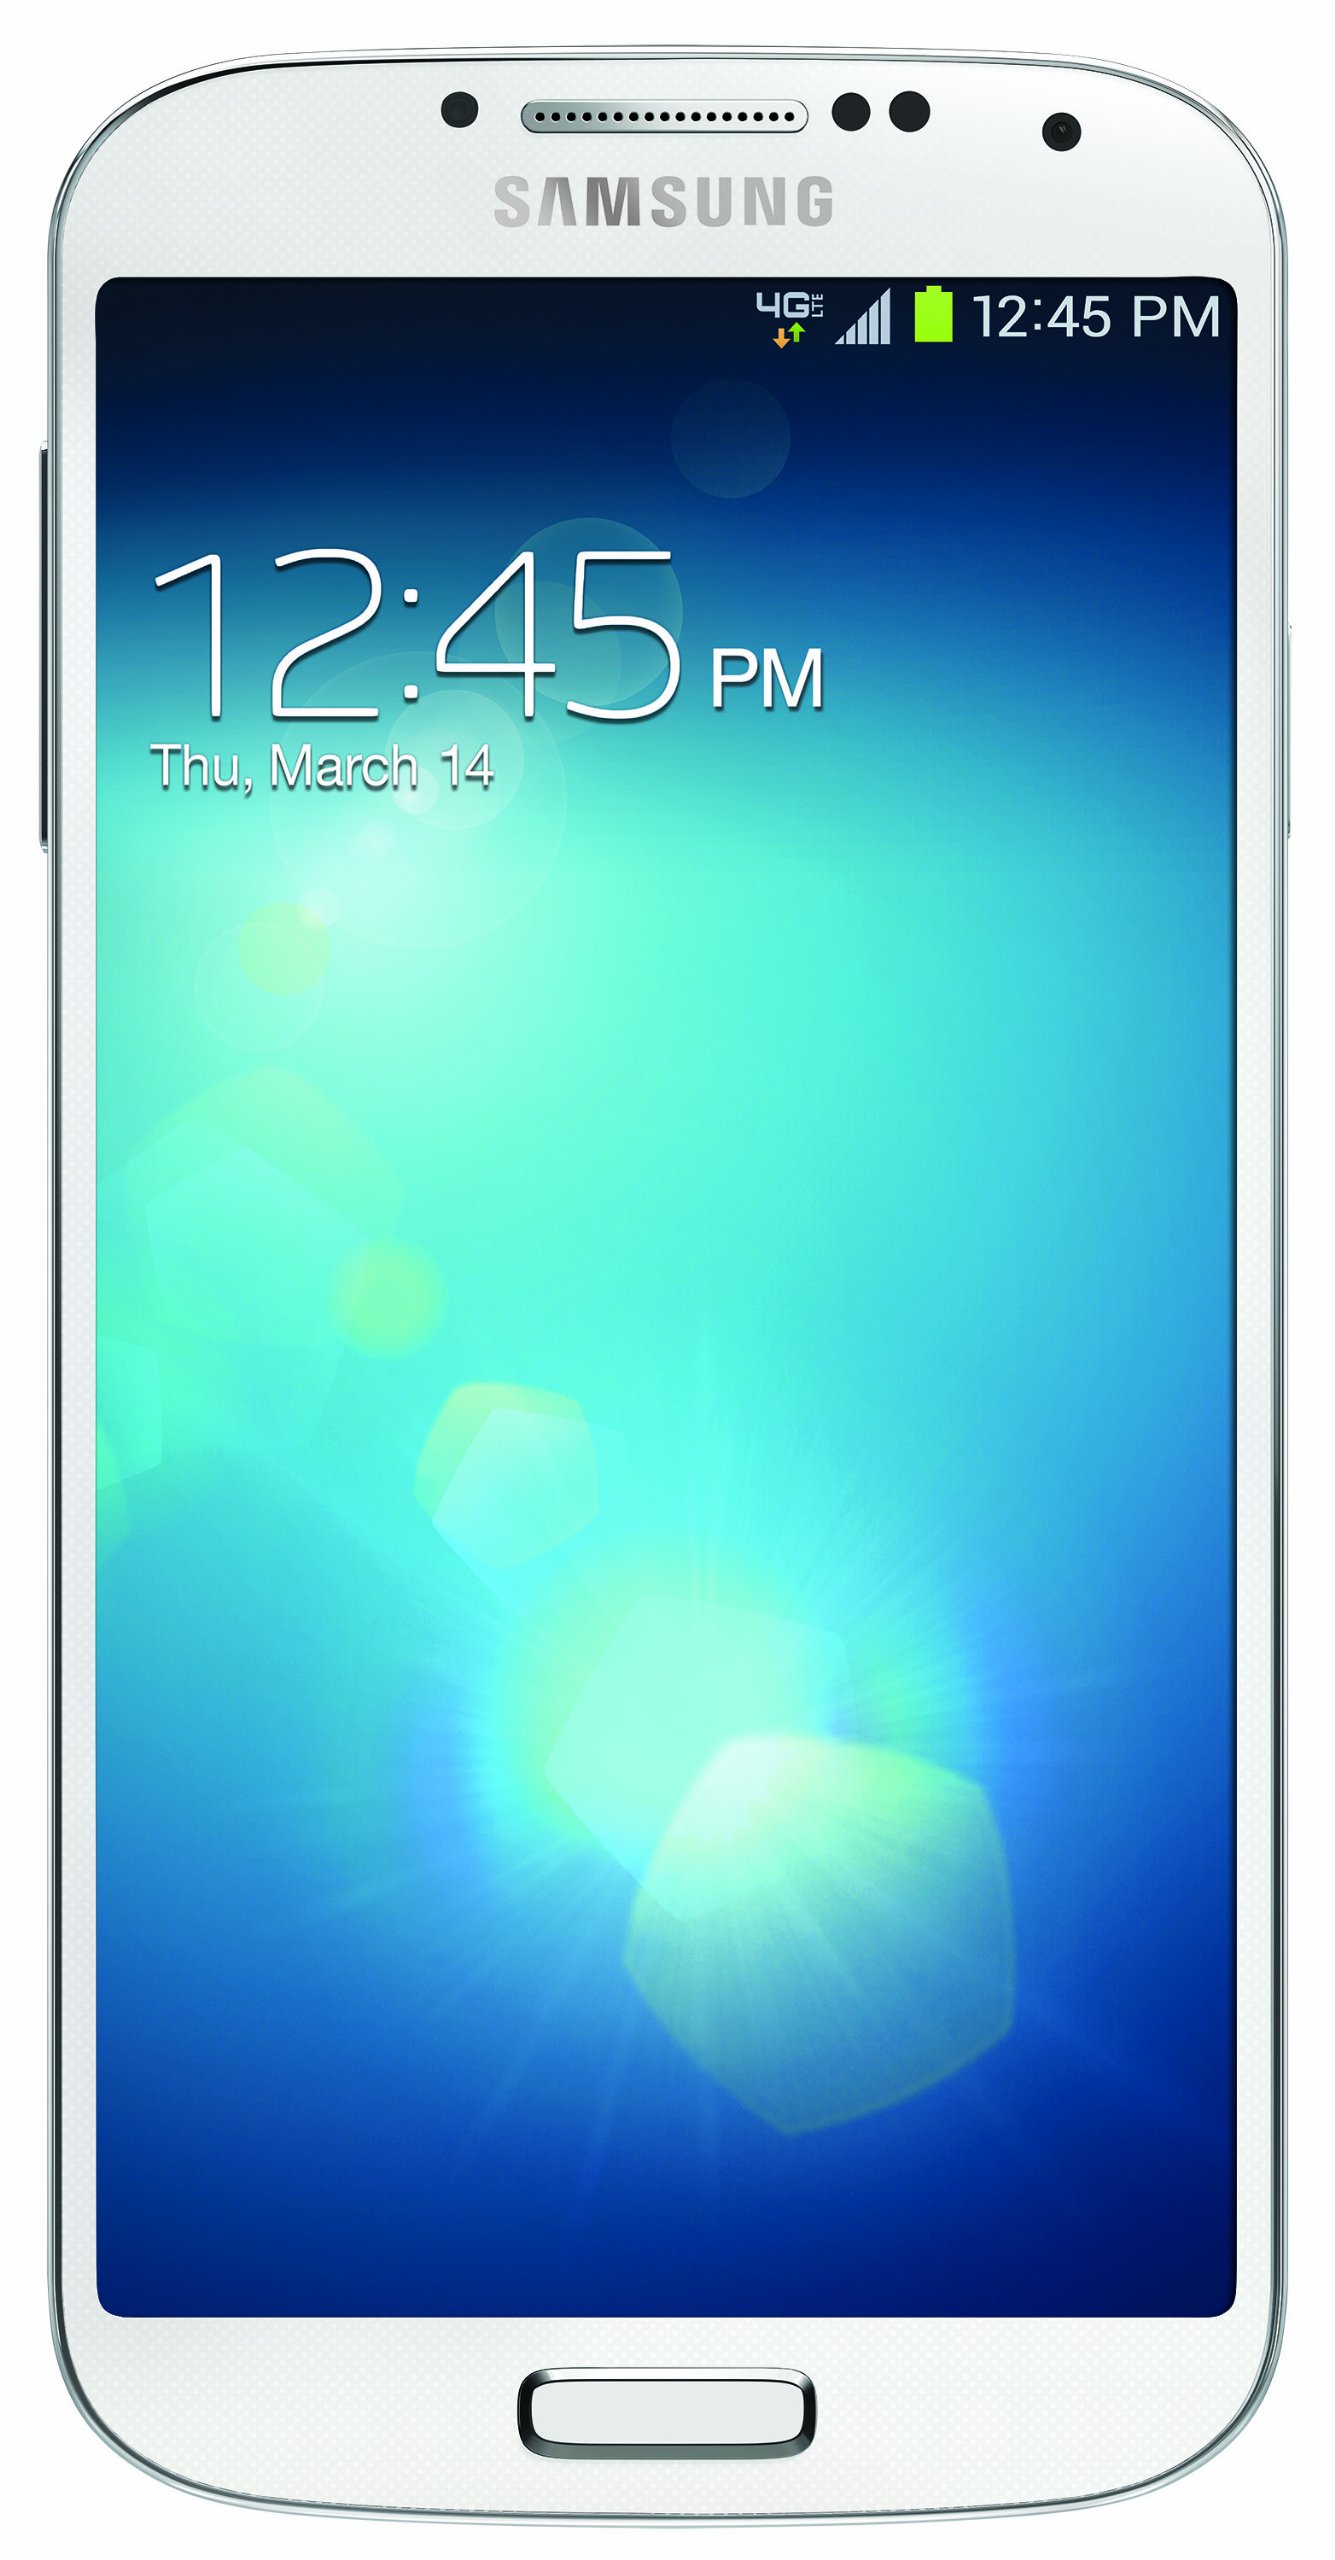 Samsung Galaxy S4, White Frost 16GB (Verizon Wireless)